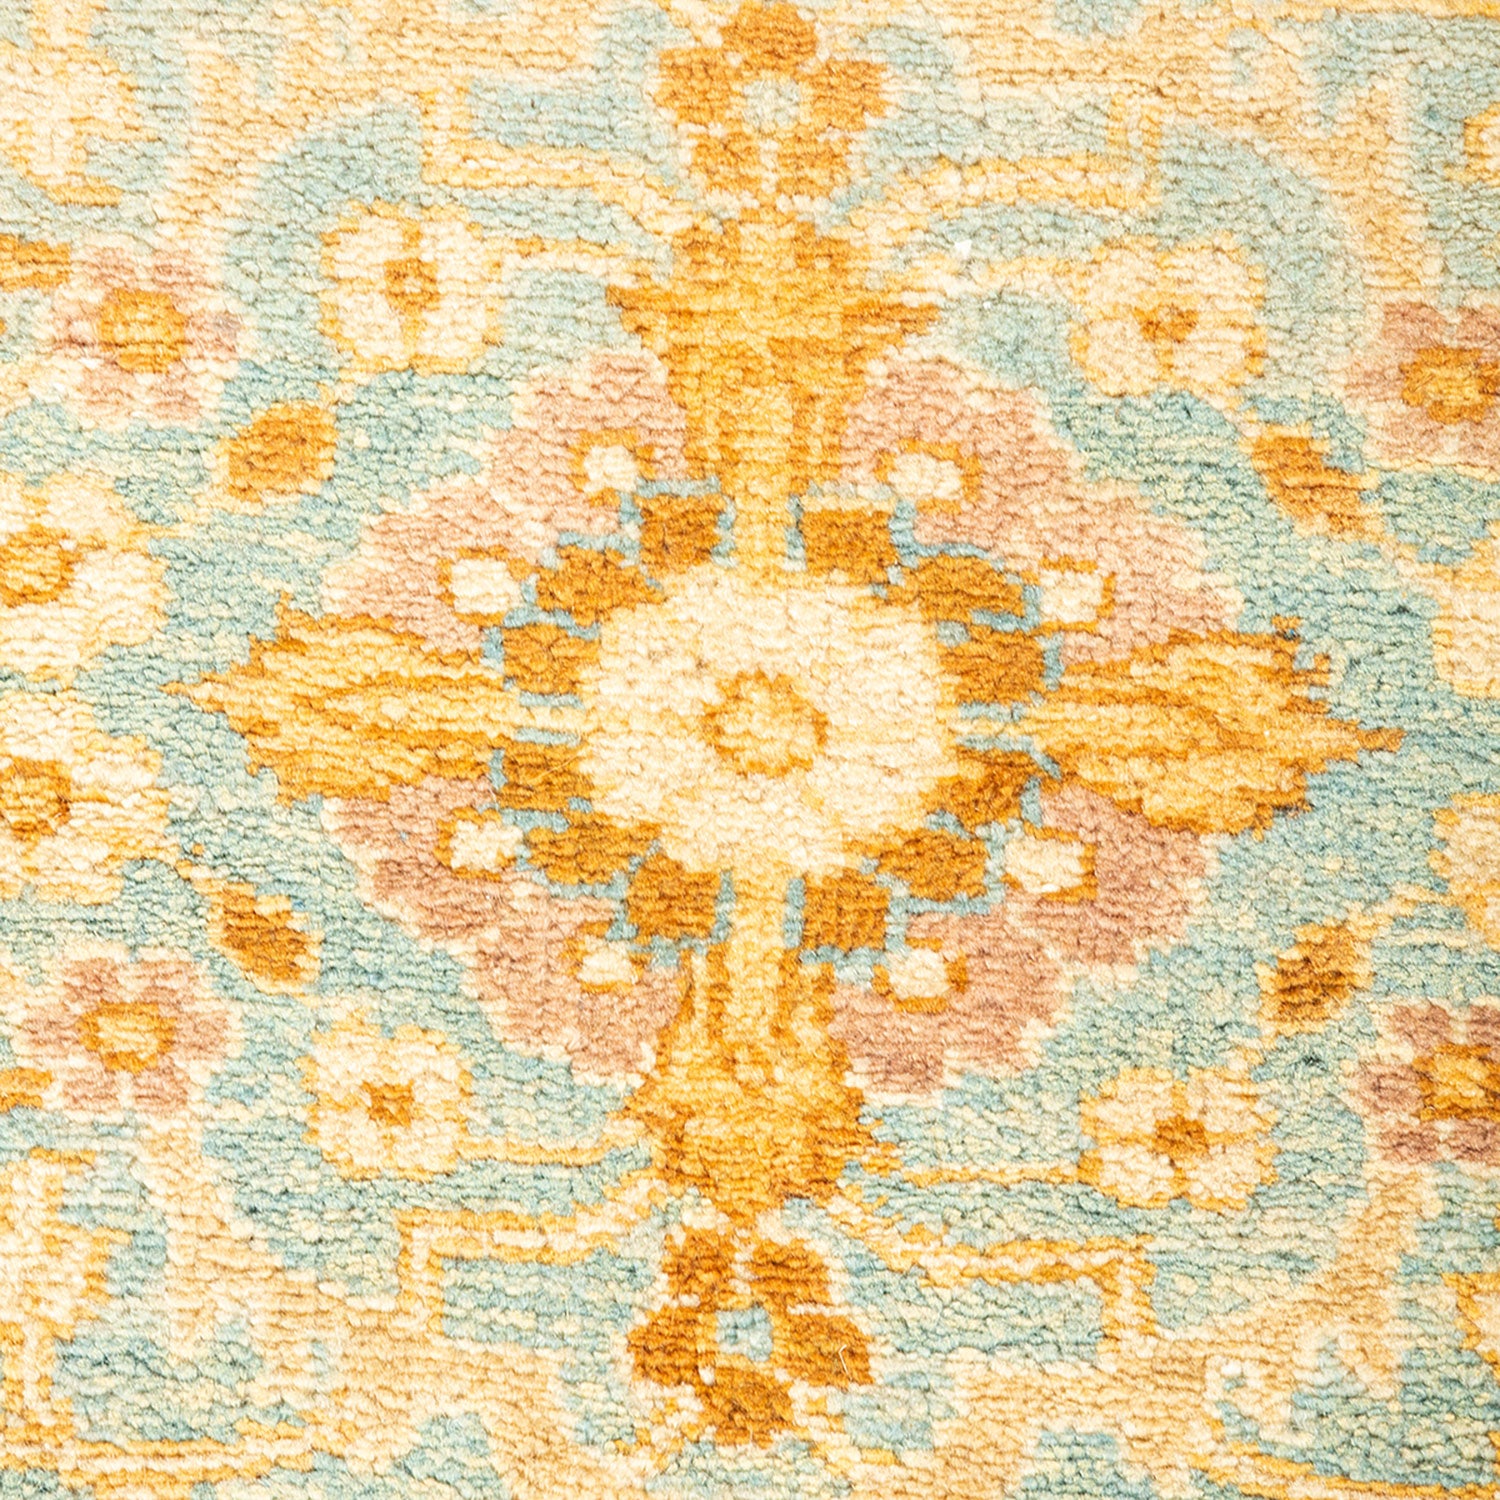 Close-up of a plush, symmetrical floral carpet with warm colors